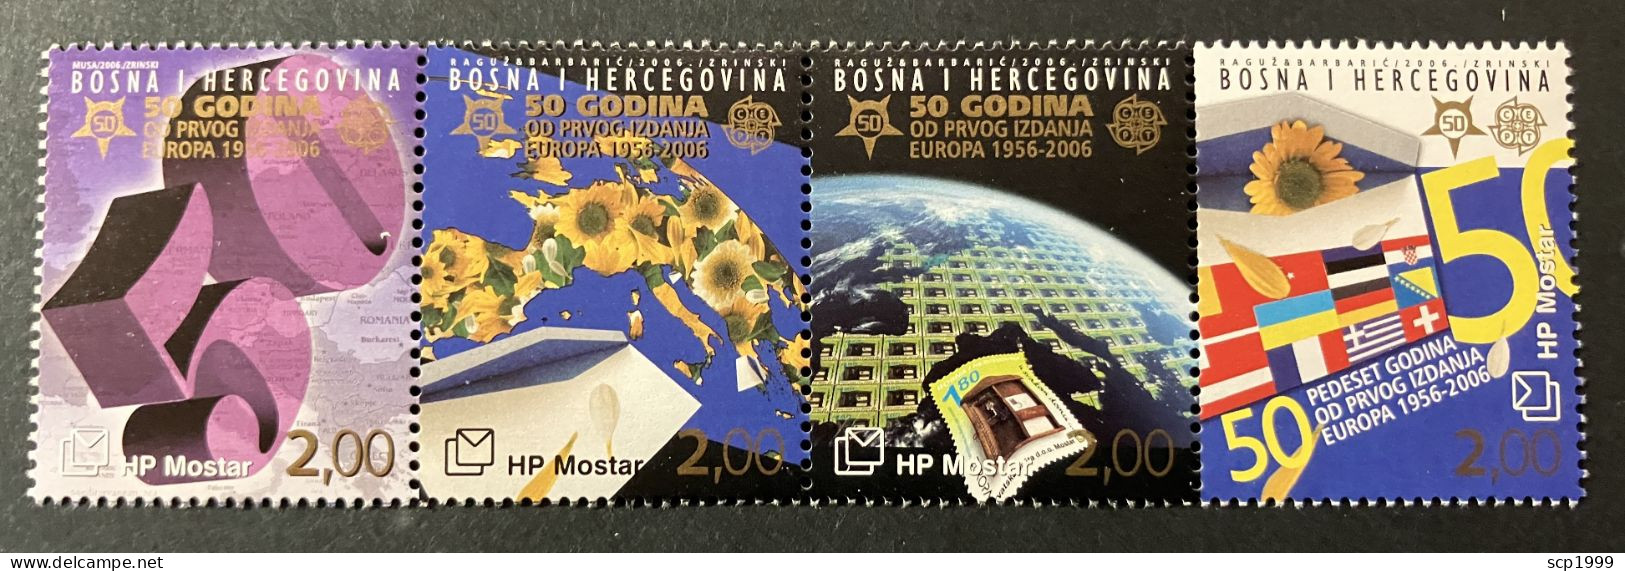 Bosnia And Herzegovina 2006 - Europa 50 Years Stamps Set MNH - Bosnia Erzegovina